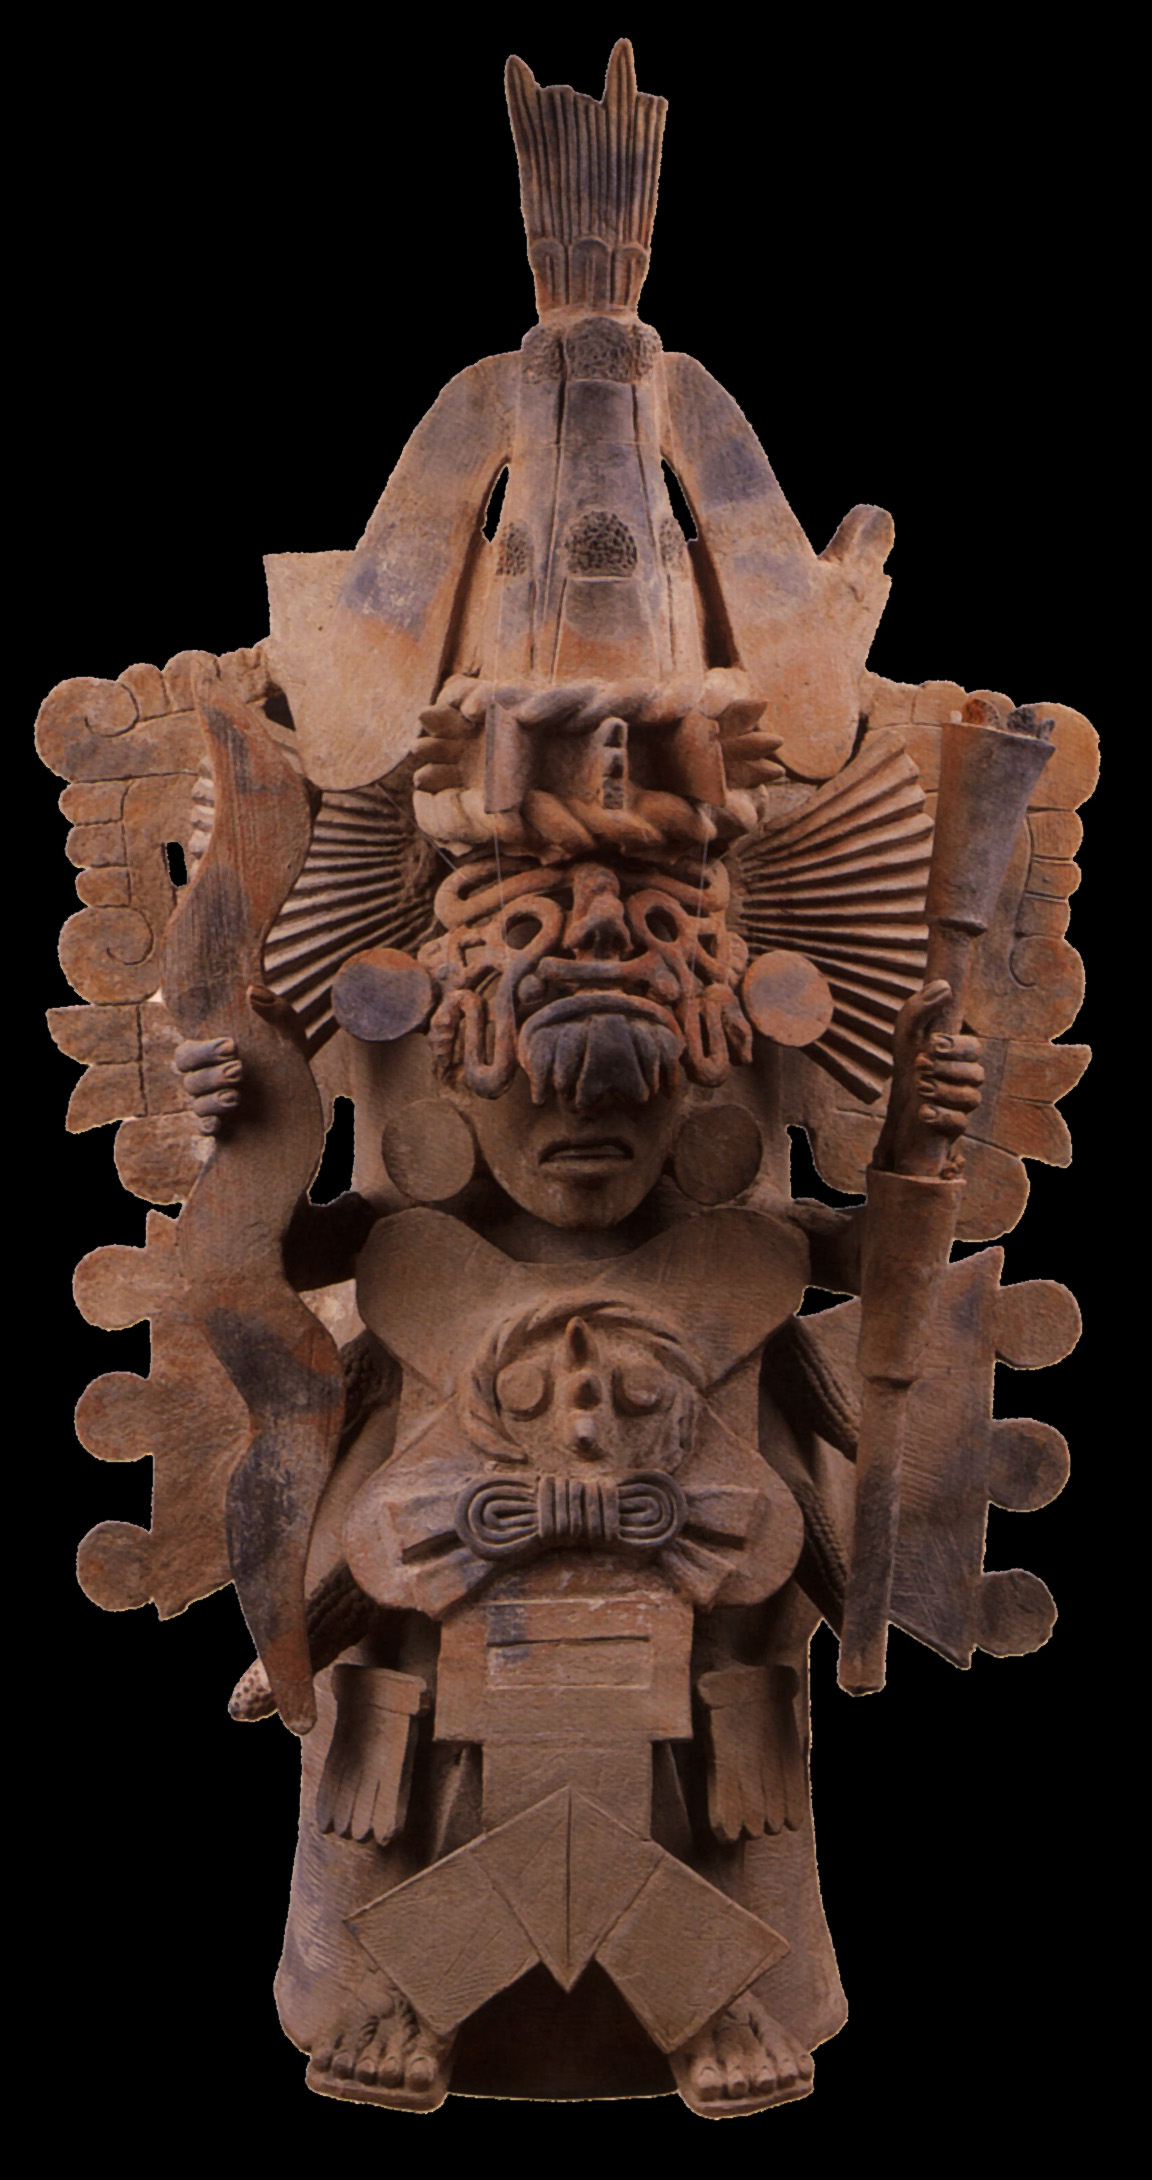 images/aleatoires//[Clio Team] 1475-1510  Vase votif aztèque  à l'image de Napatecuhtli  Terre cuite peinte  121x65x48 cm  Mexico, Museo Nacional de antropologia.jpg